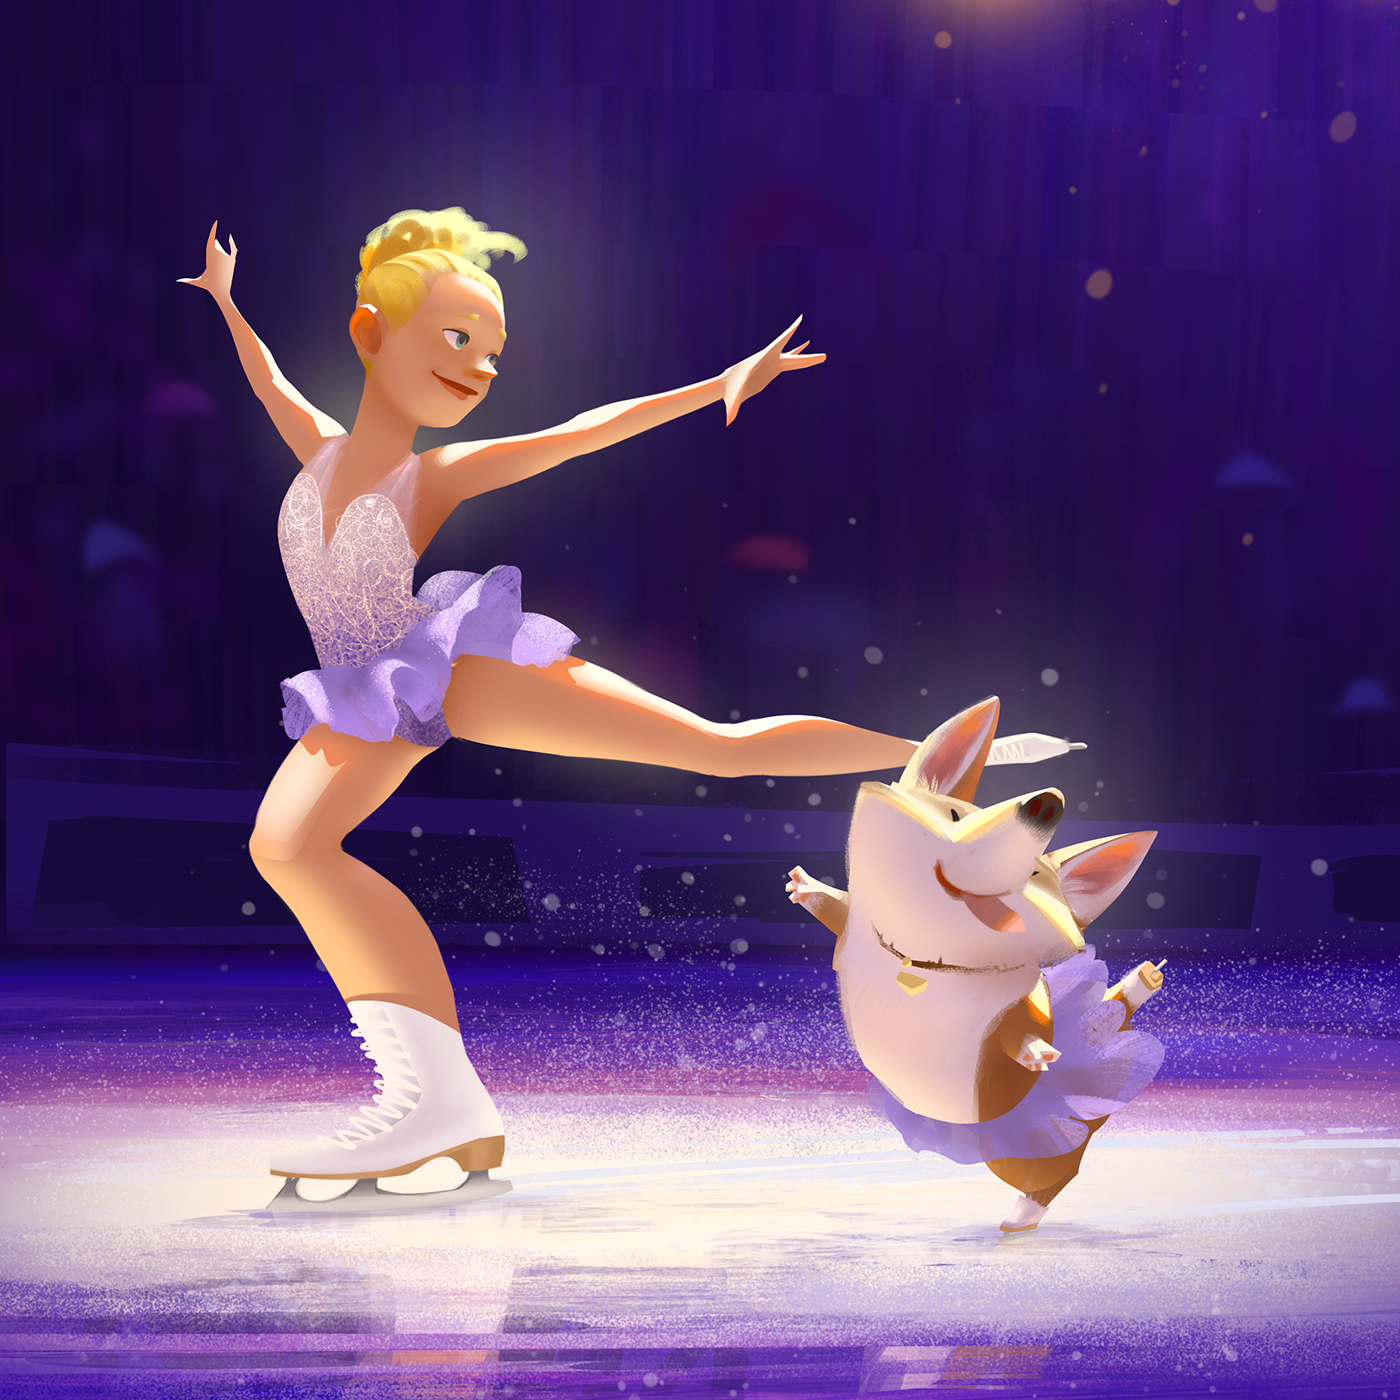 ice skate winter olympic Corgi Character dog girl